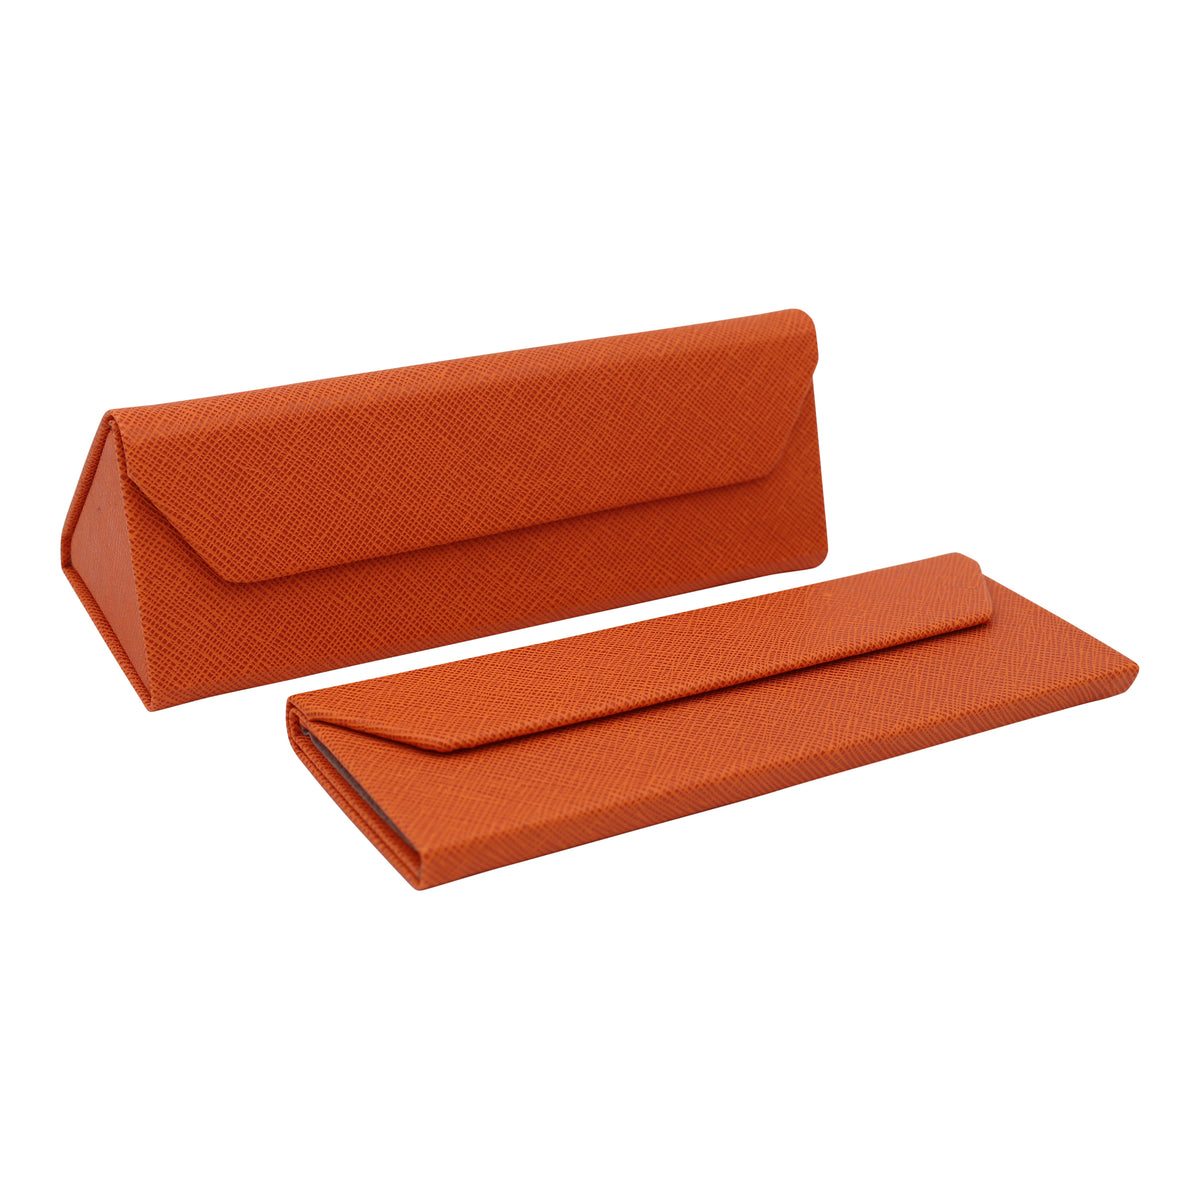 Adorable Solid Color Leather Glasses Case - Orange